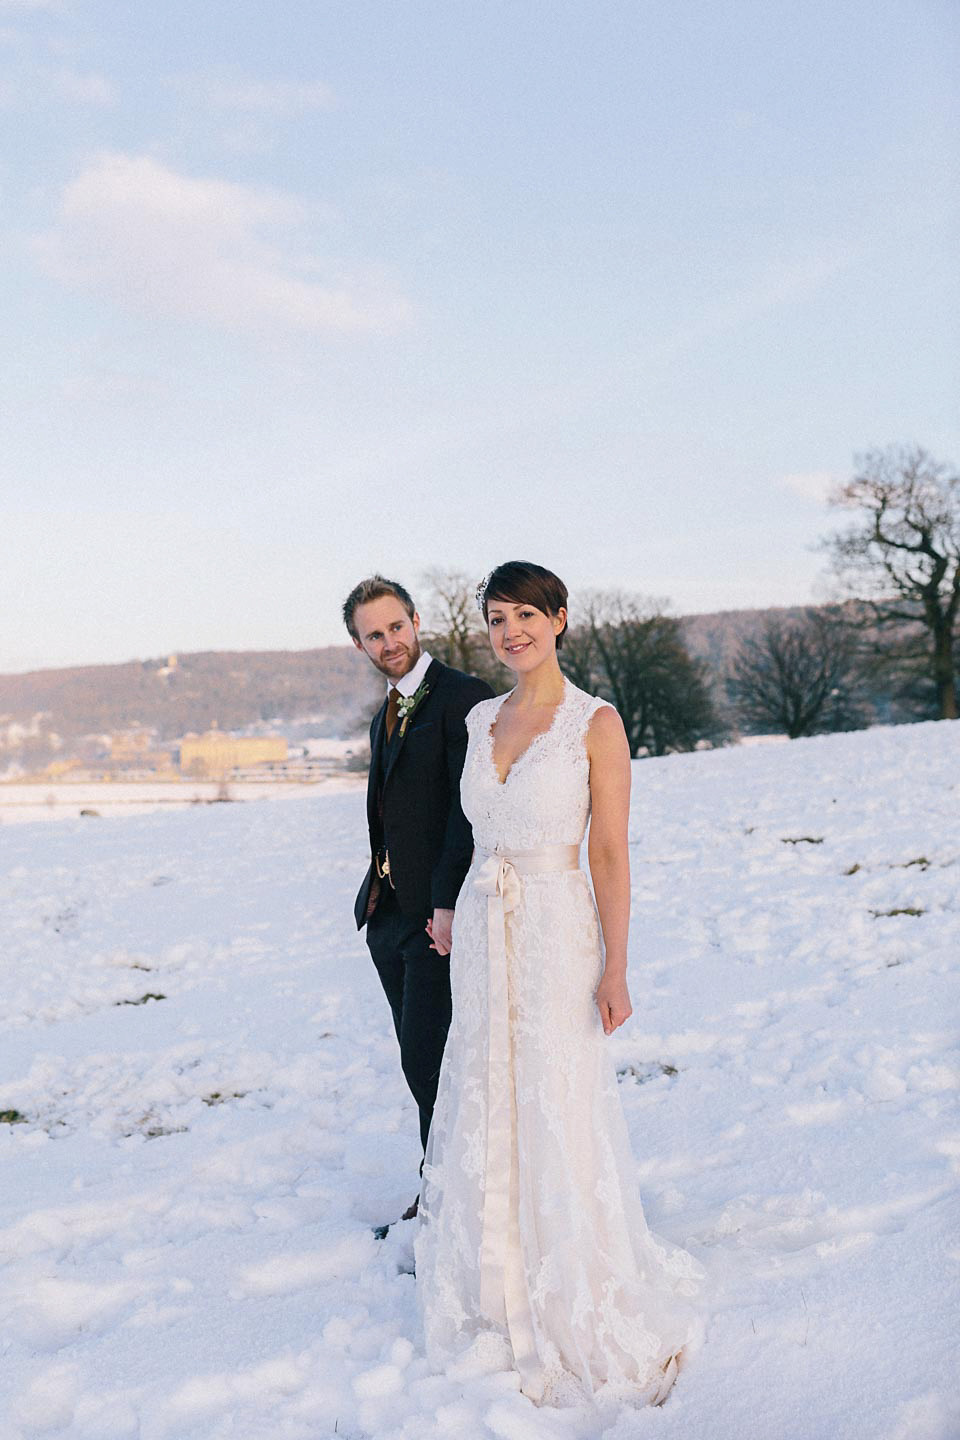 maggie sottero, snowy wedding, winter wedding, brighton photography